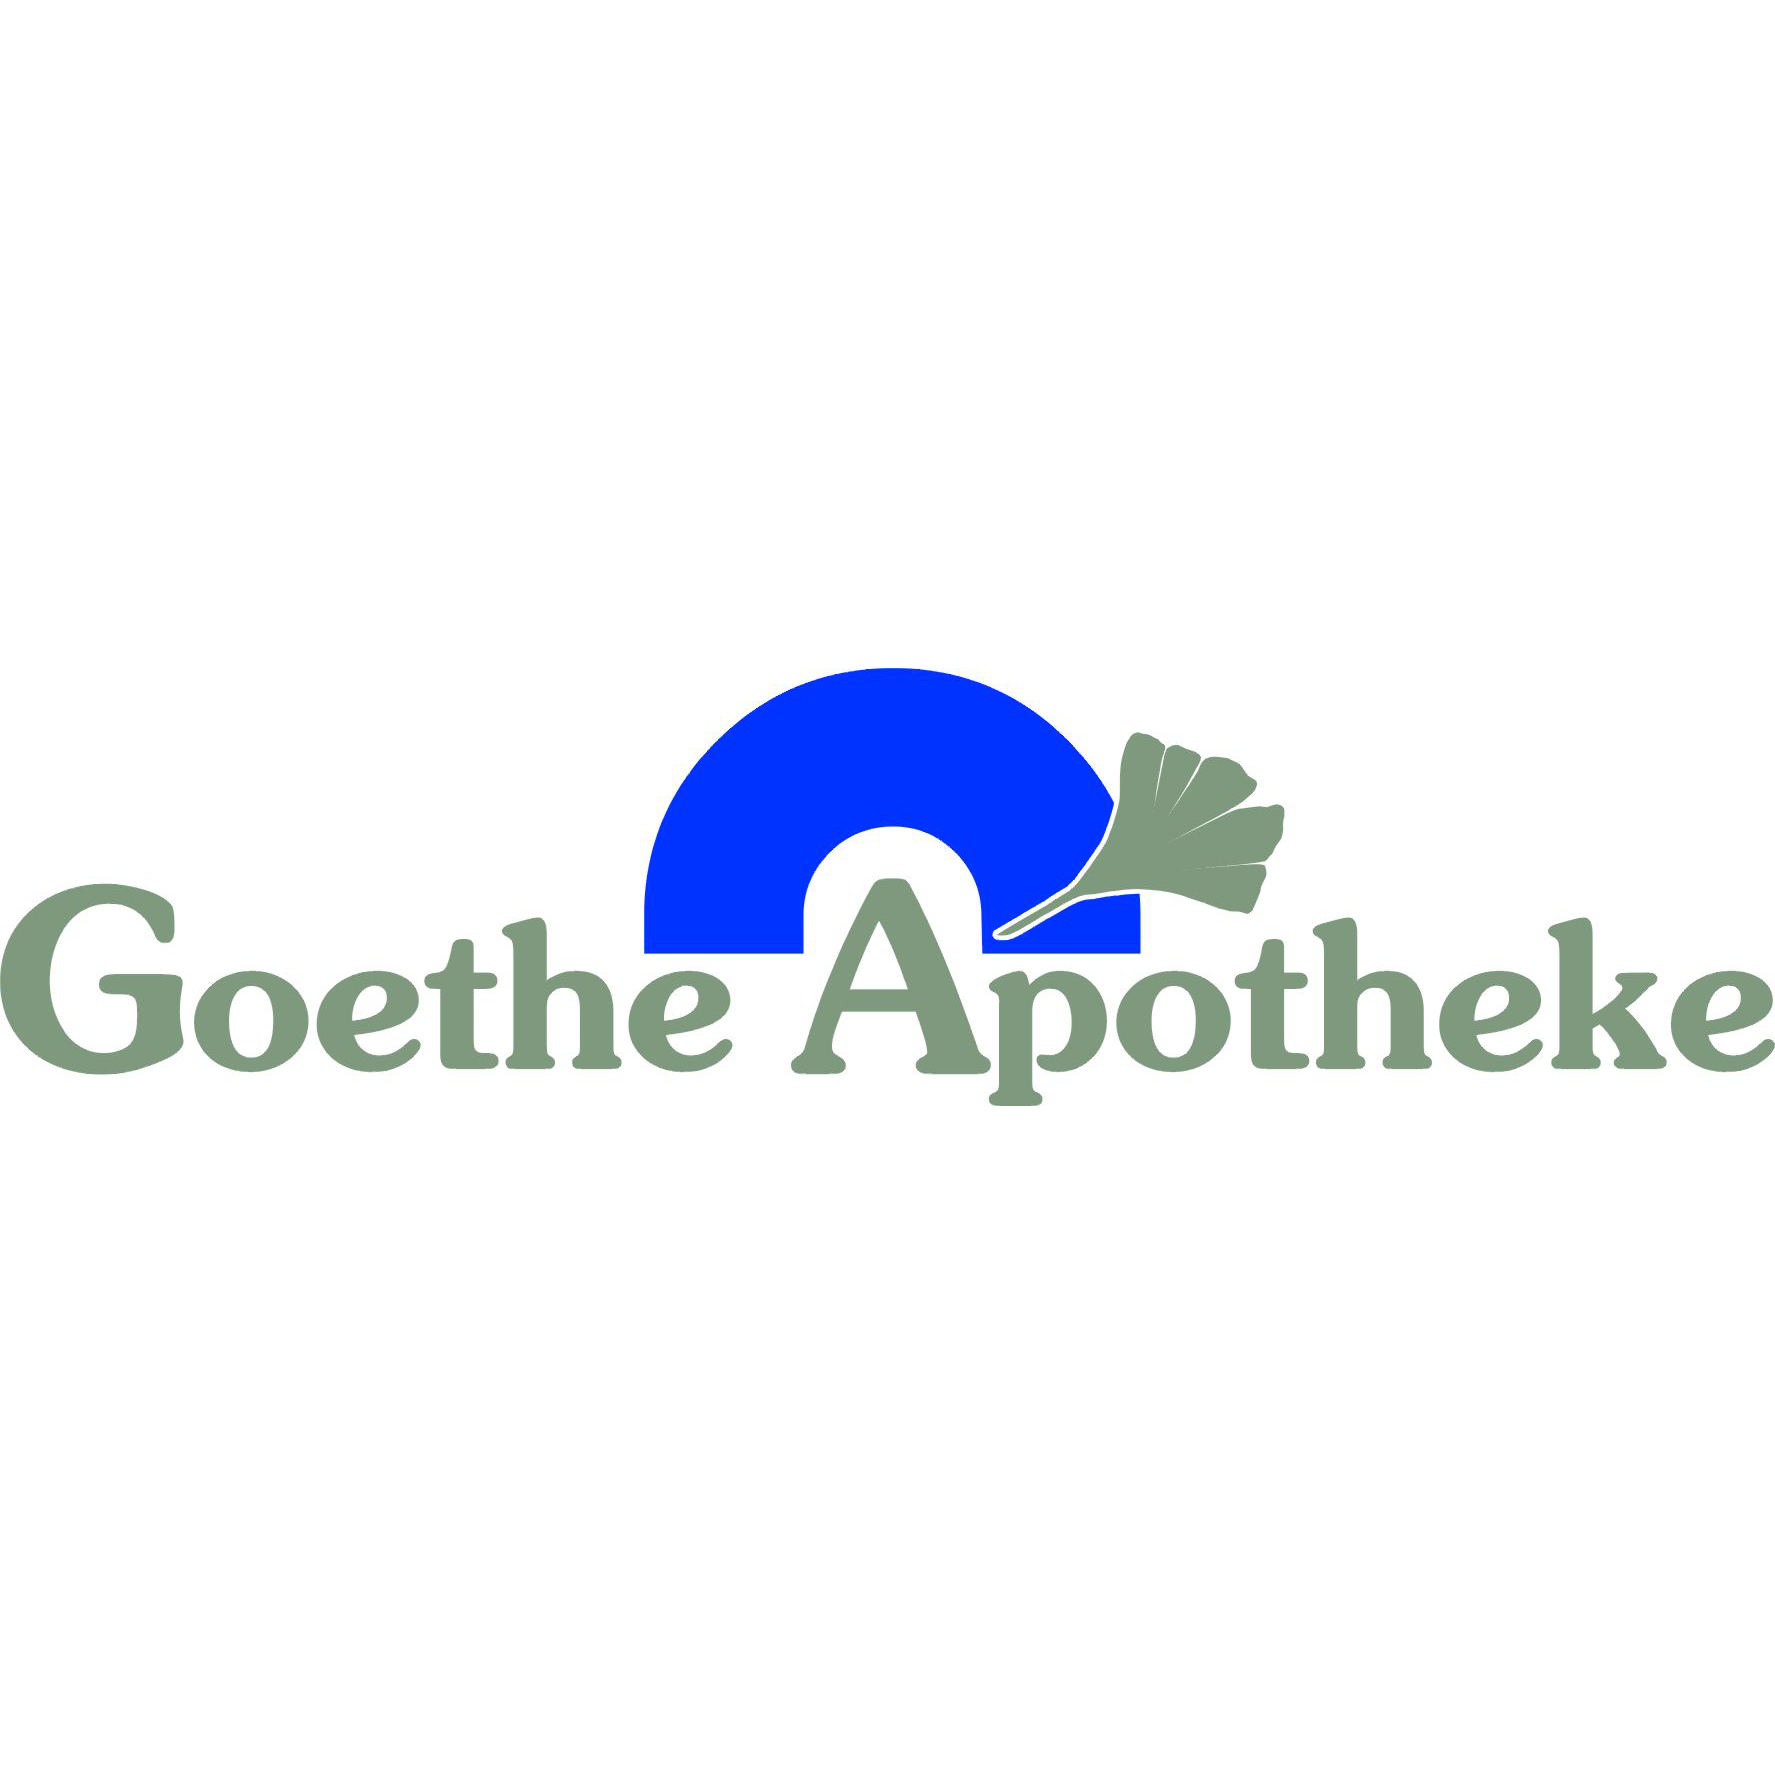 Goethe-Apotheke in Gerlingen - Logo